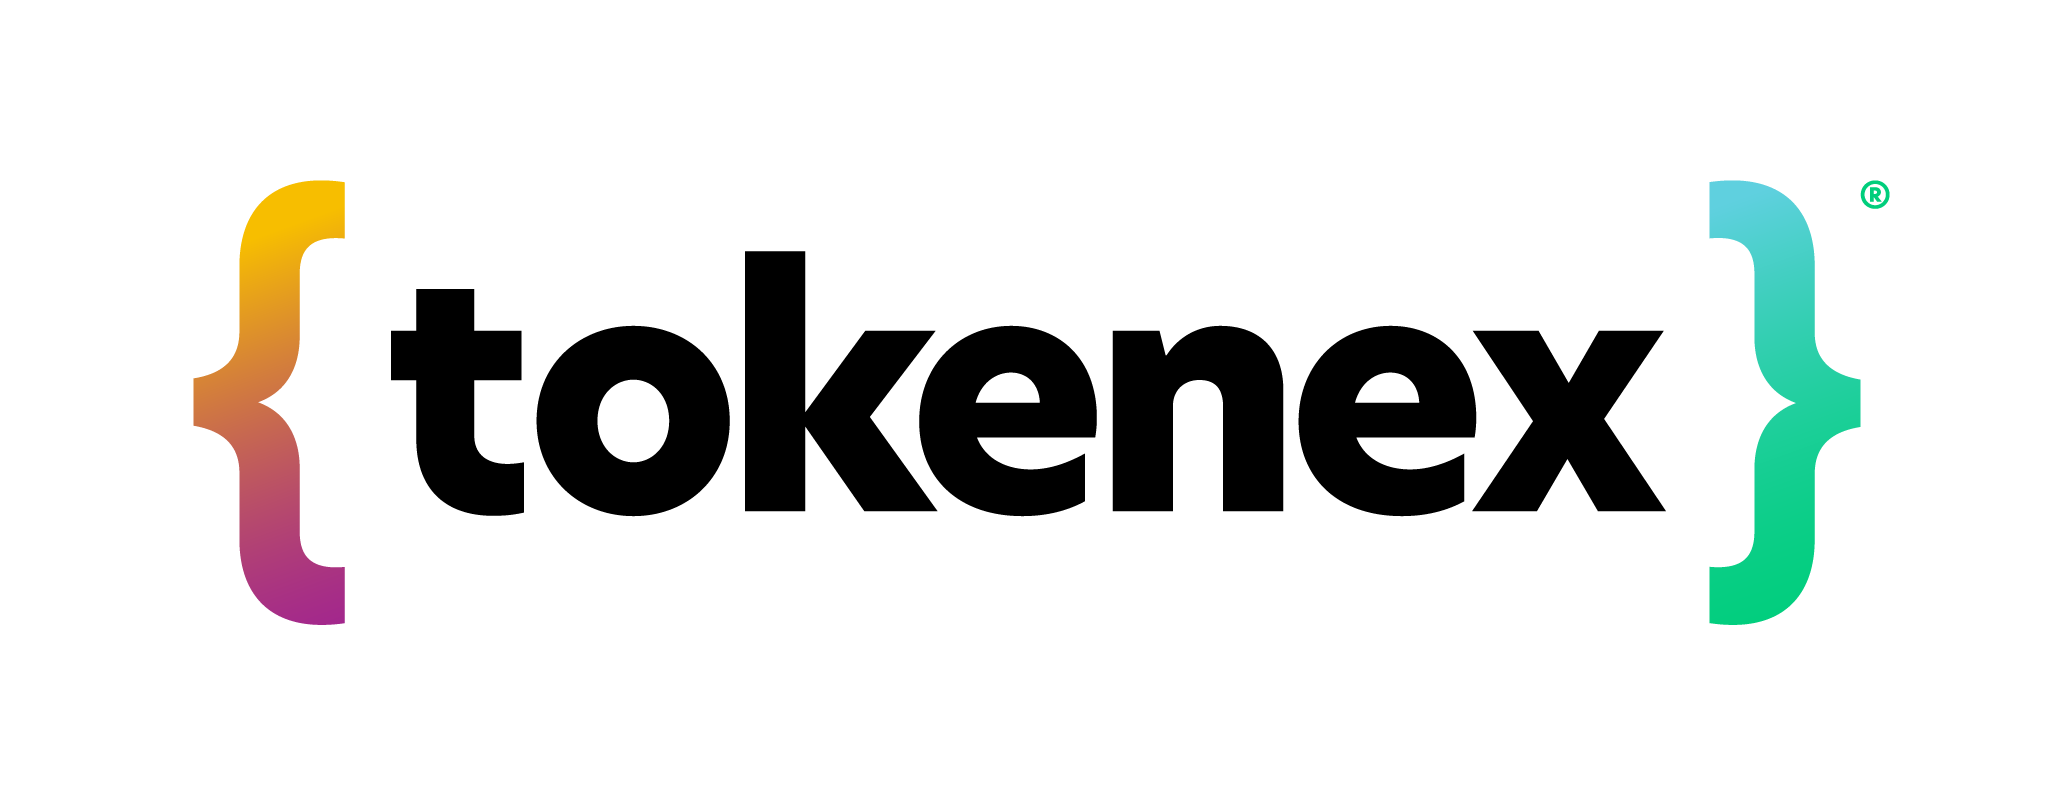 TokenEx, Inc. Logo